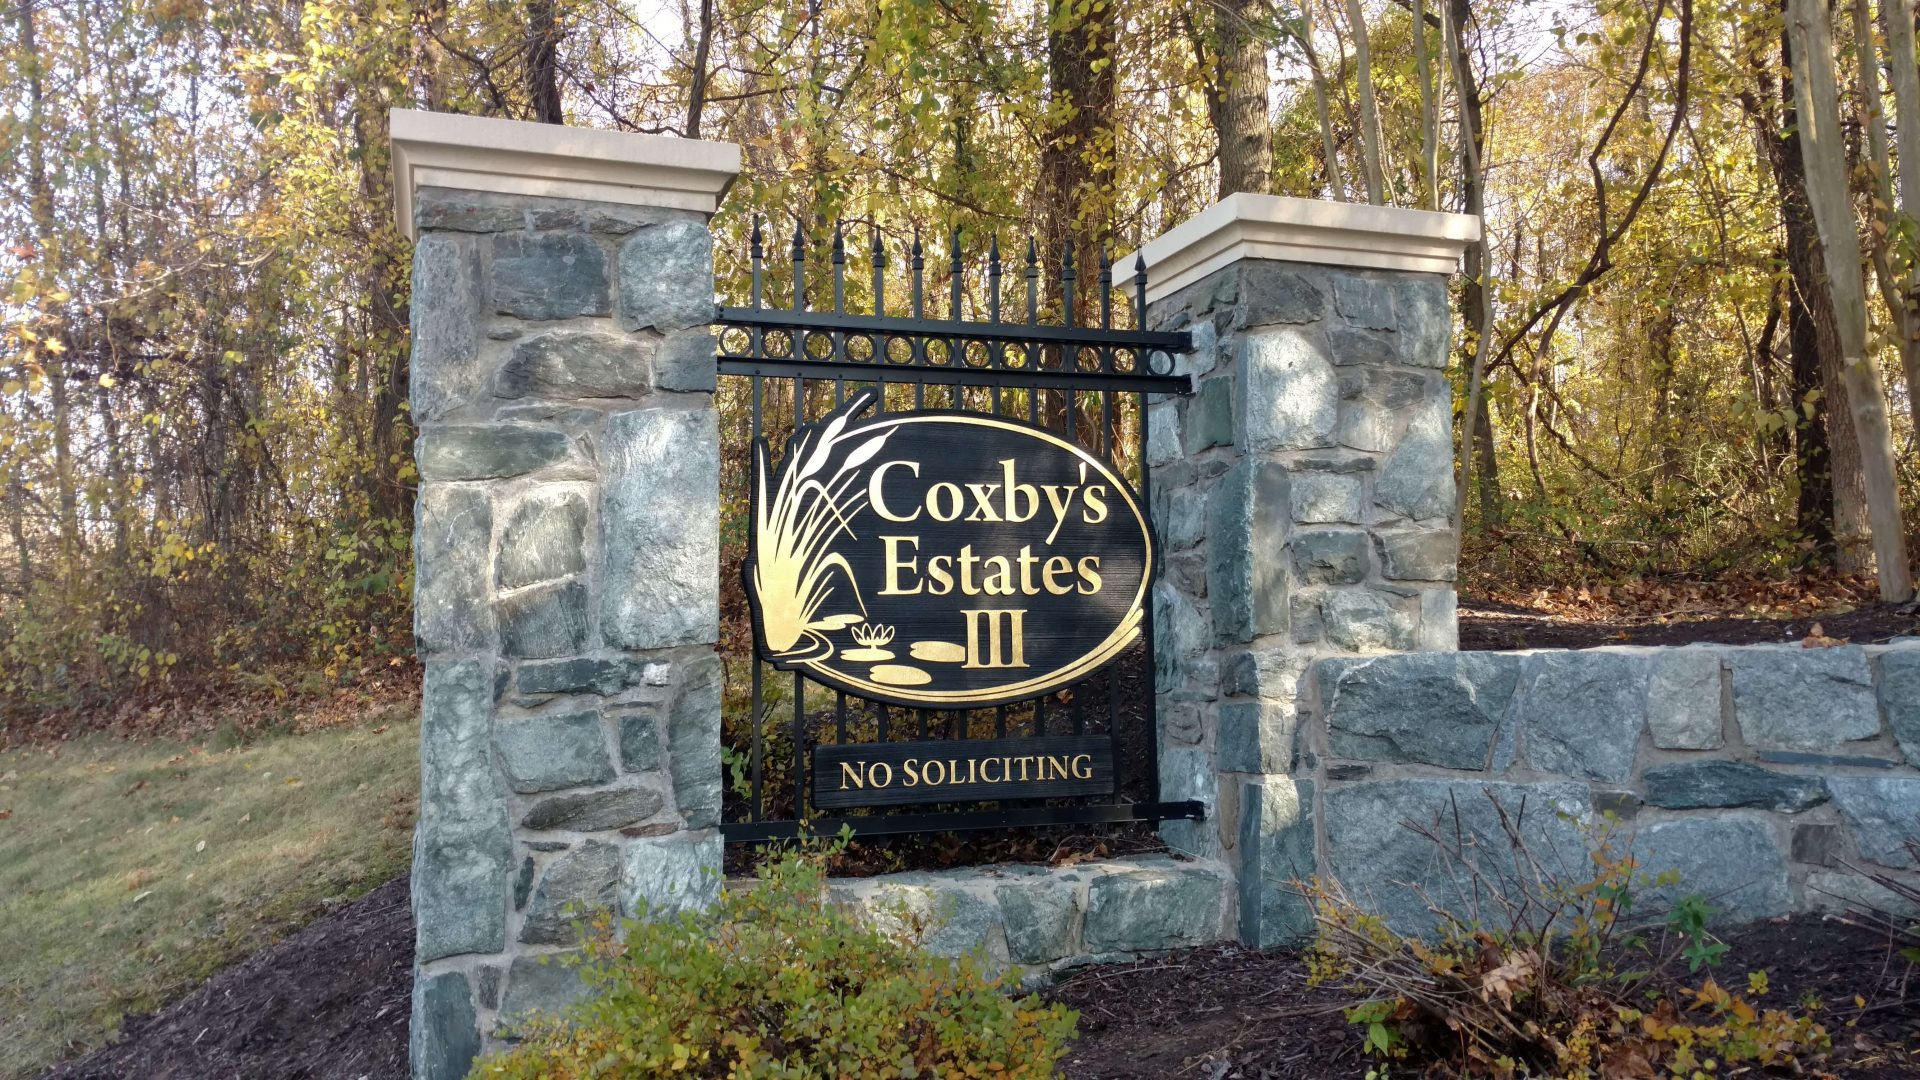 Estate Entrance Designs – Community Entrance Sign at Coxby’s Estates III